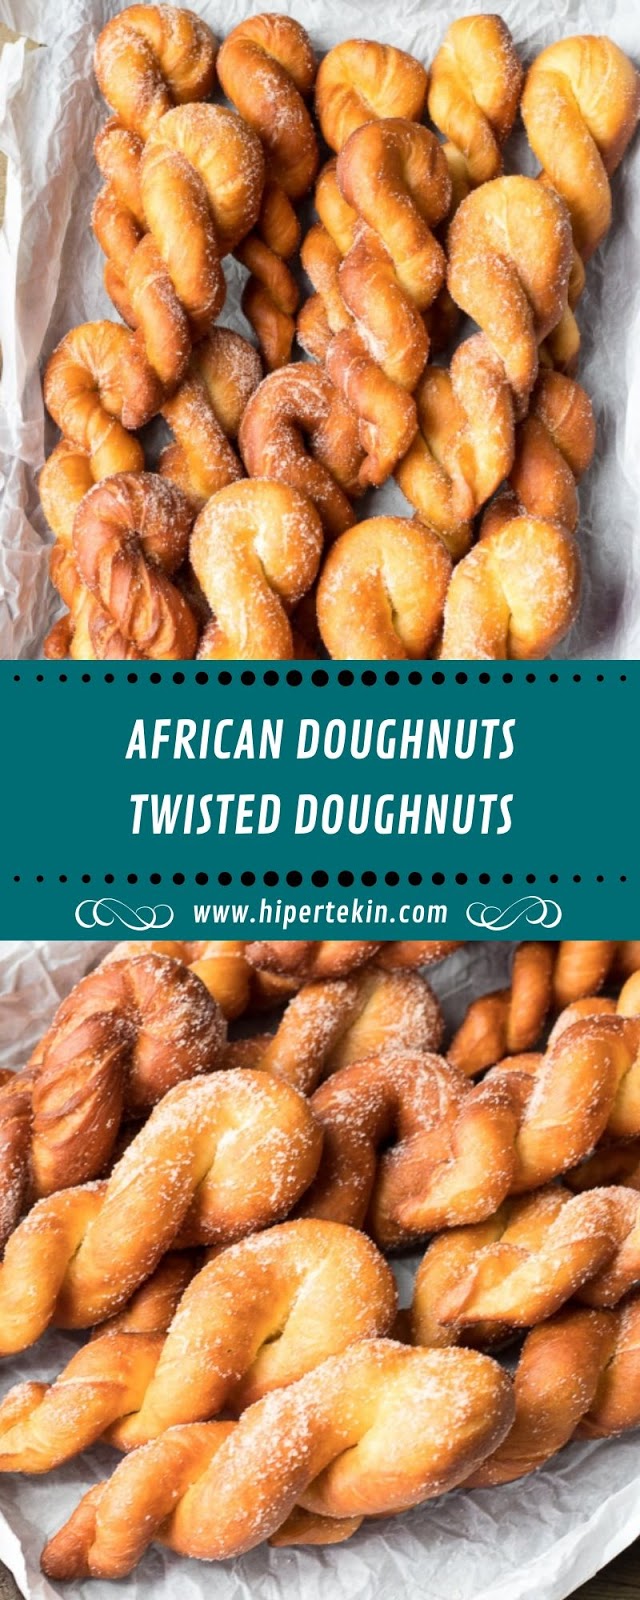 AFRICAN DOUGHNUTS – TWISTED DOUGHNUTS